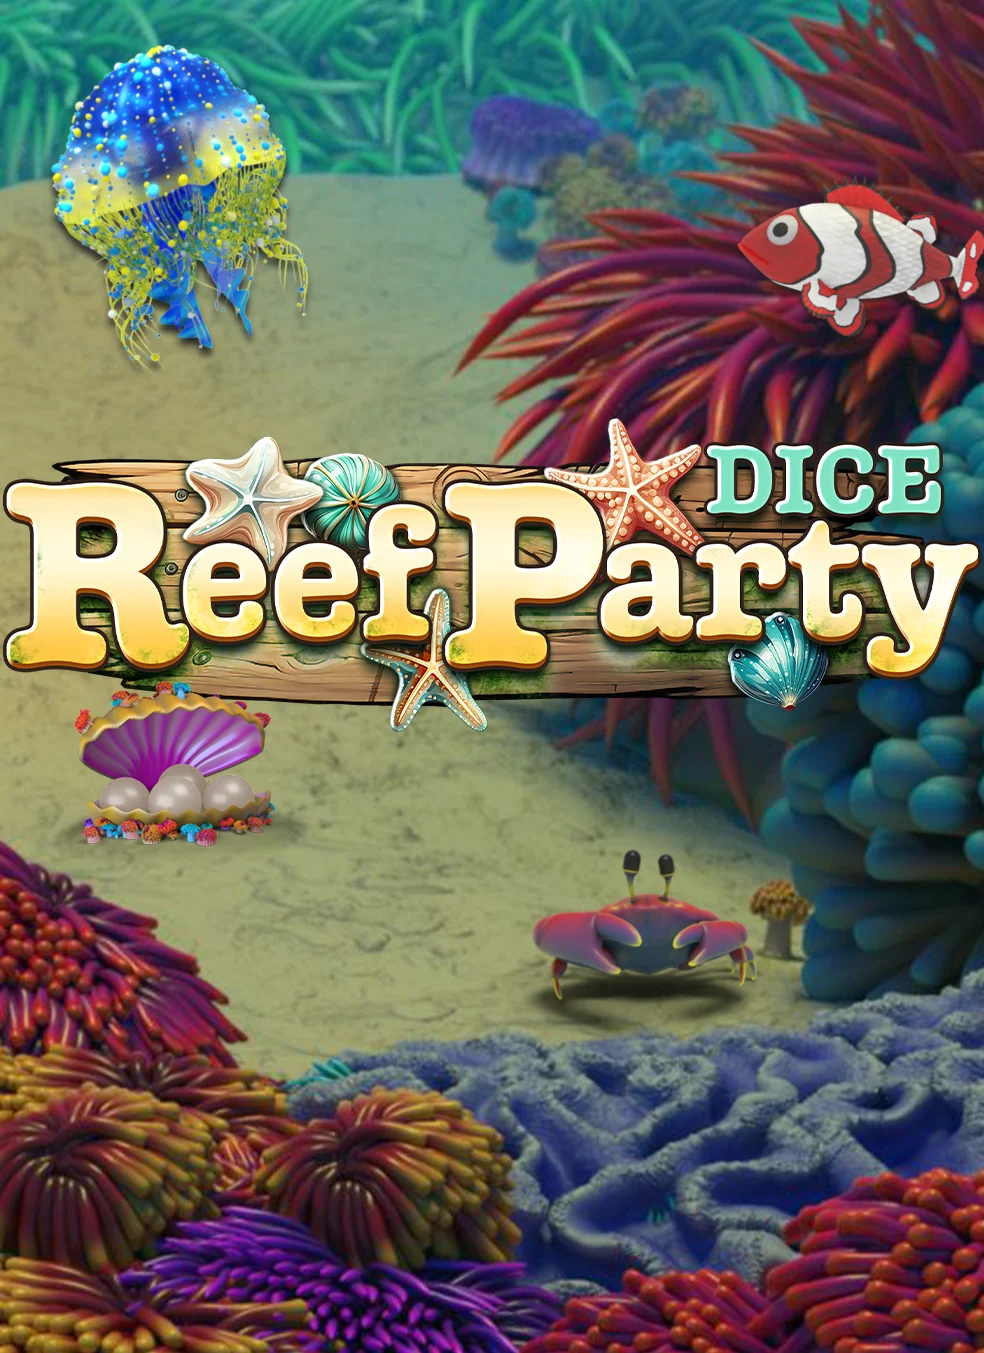 Play Reef Party Dice on Starcasinodice online casino